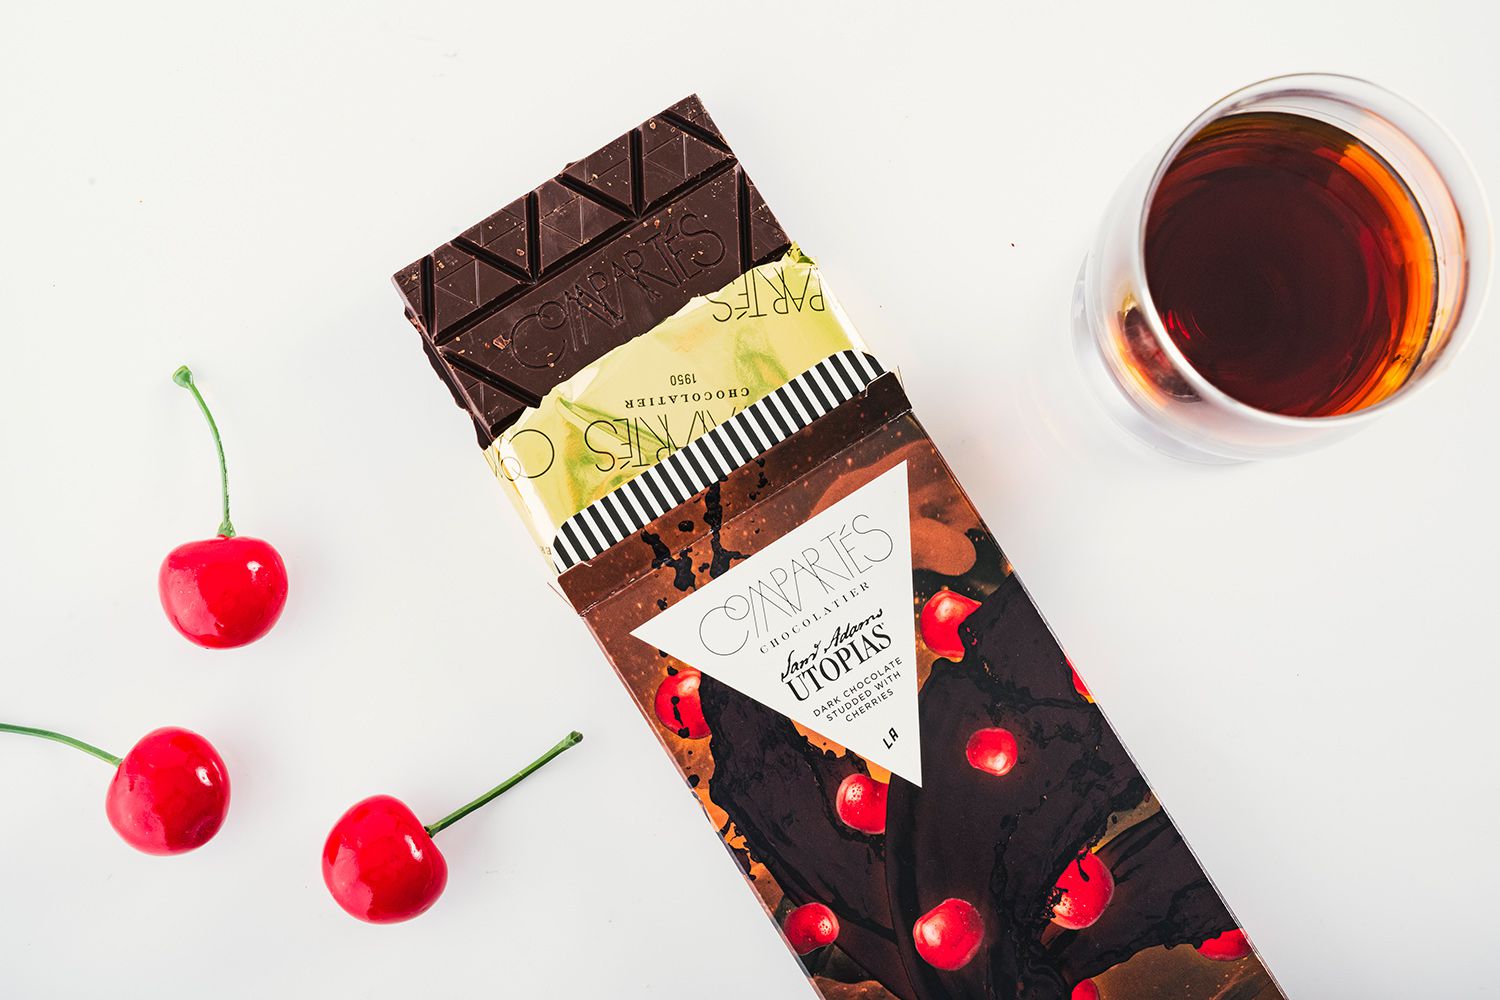 Samuel Adams and Compartes Chocolate Bar